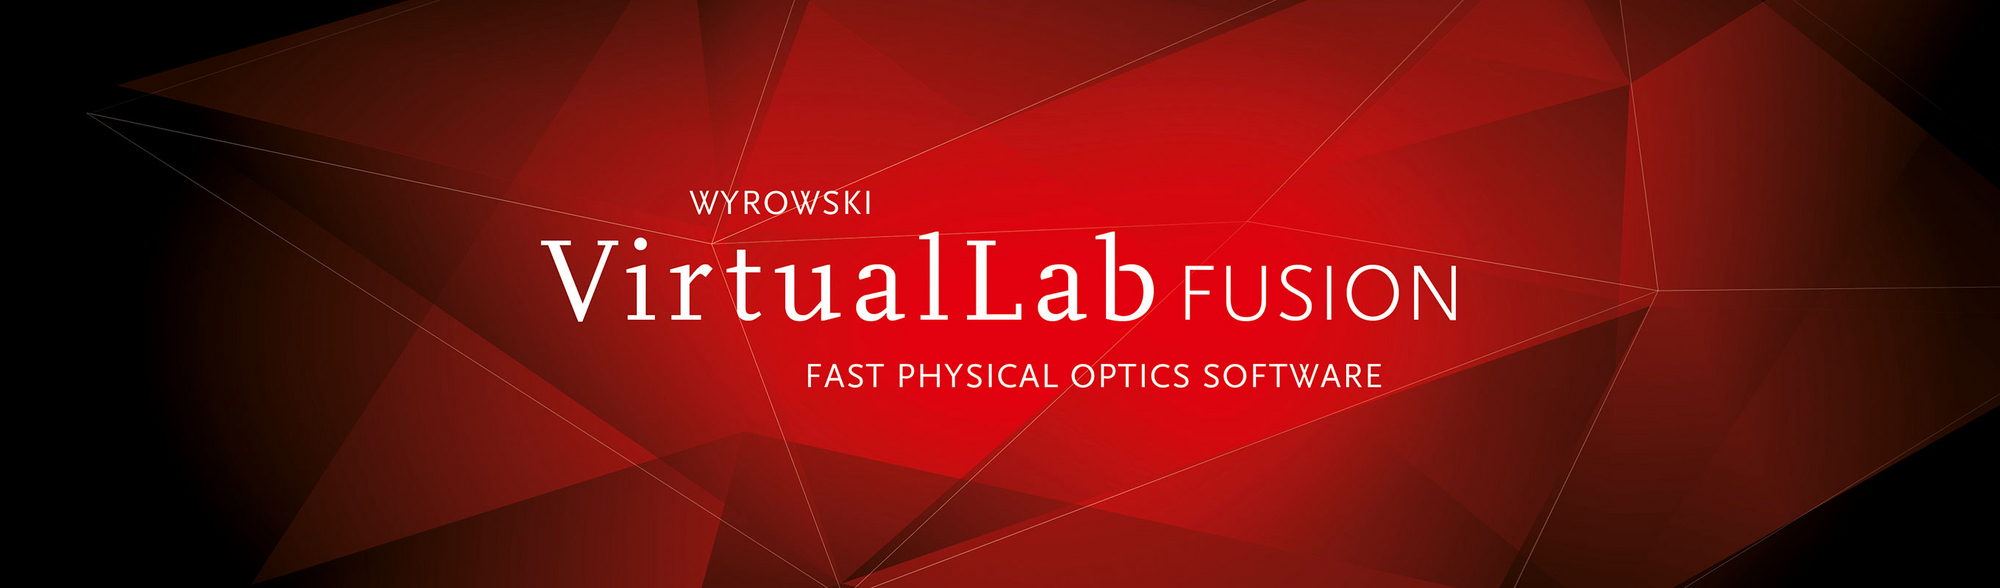 Our VirtualLab Fusion Logo - Fast Physical Optics Software.